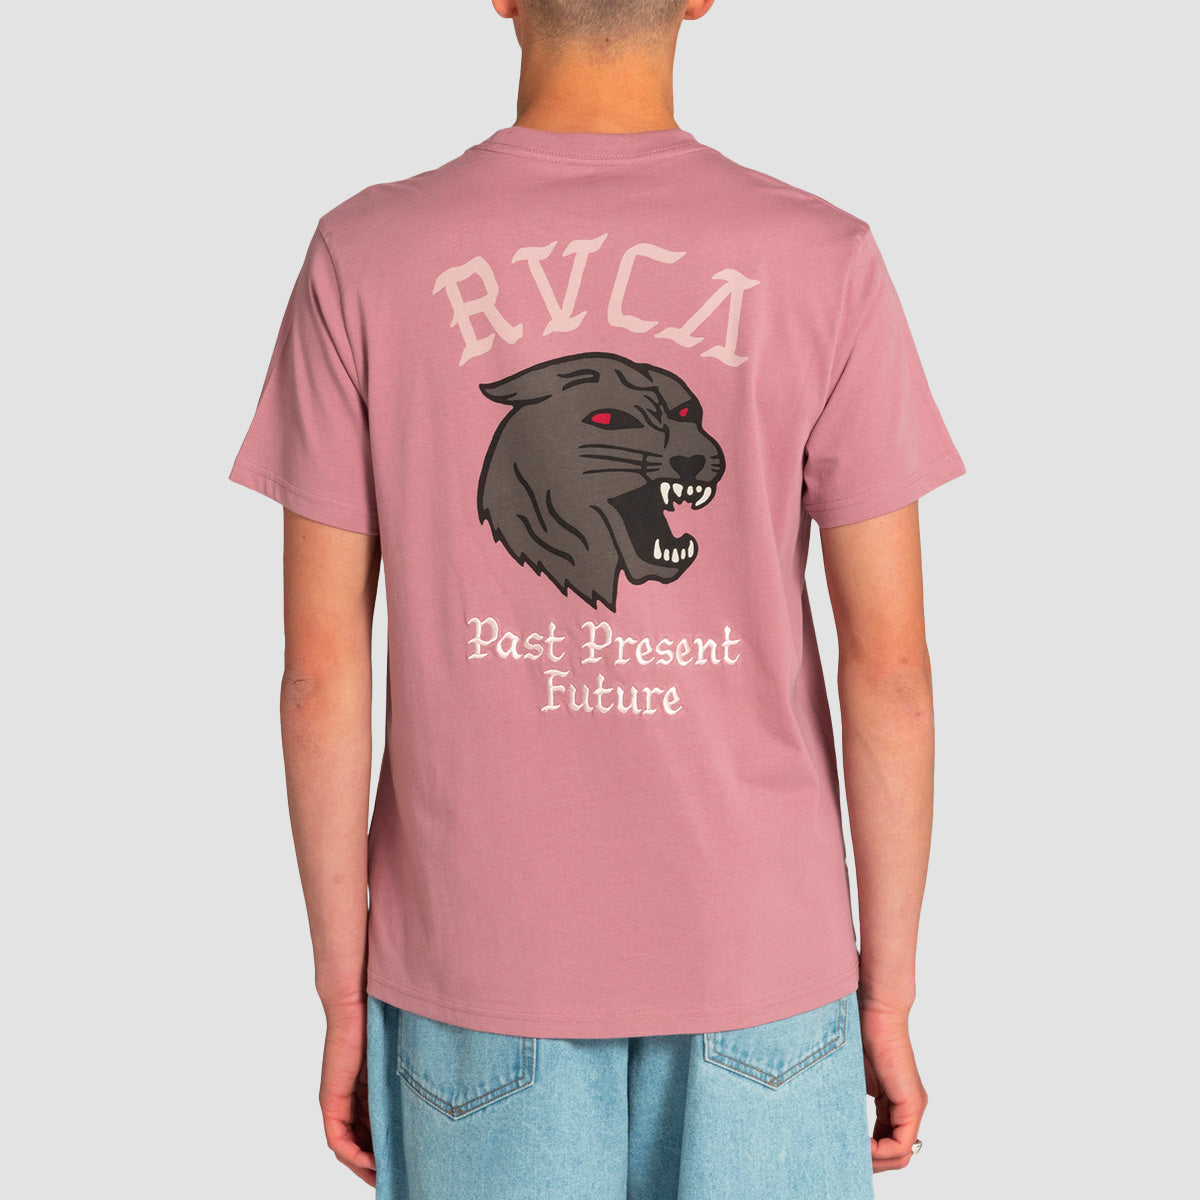 RVCA Mascot T-Shirt Lavender